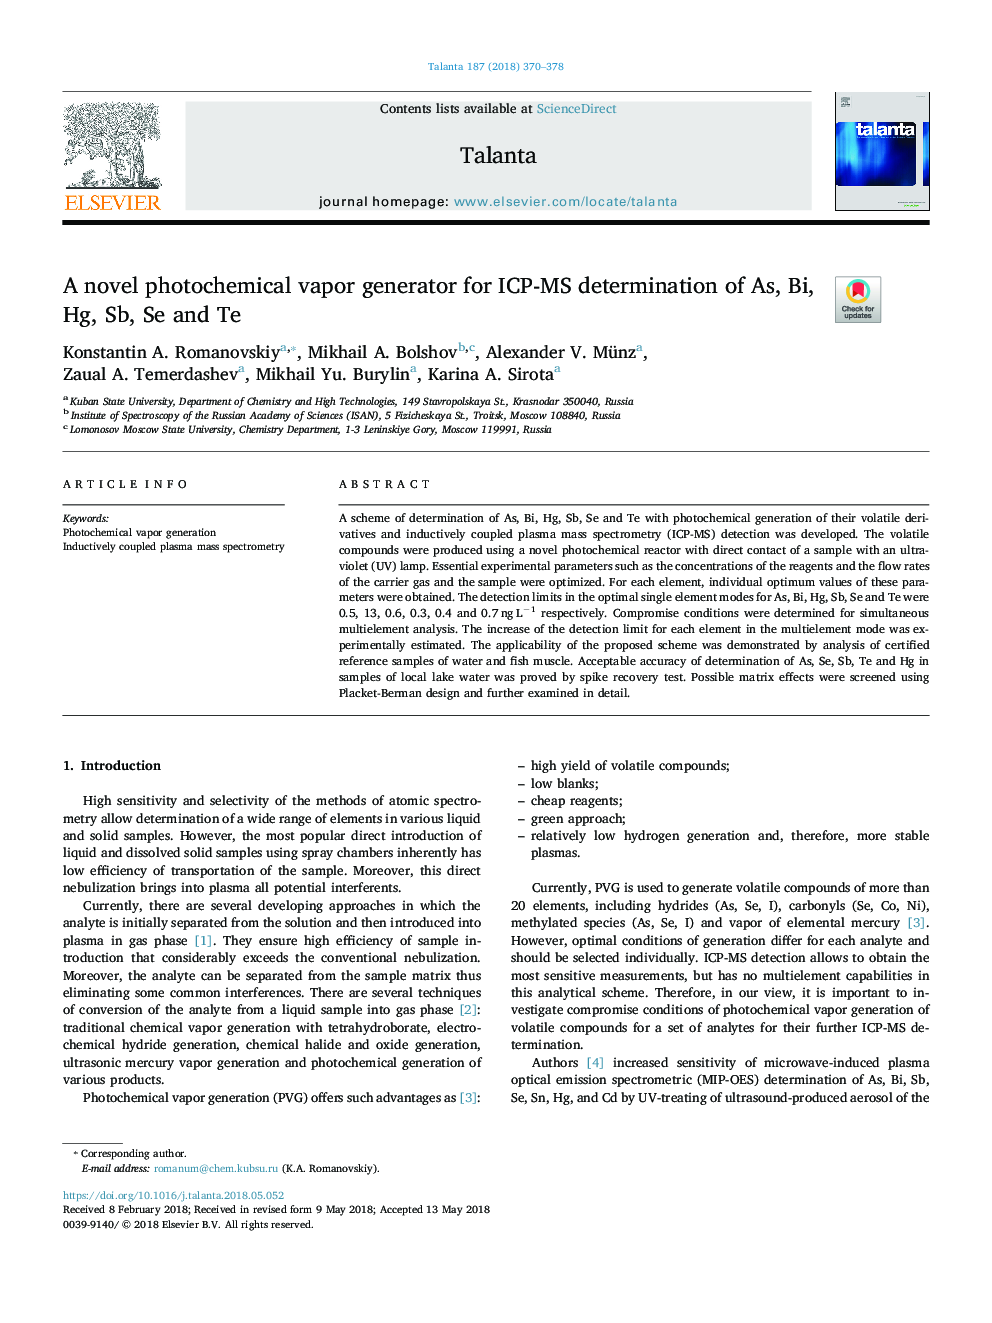 A novel photochemical vapor generator for ICP-MS determination of As, Bi, Hg, Sb, Se and Te